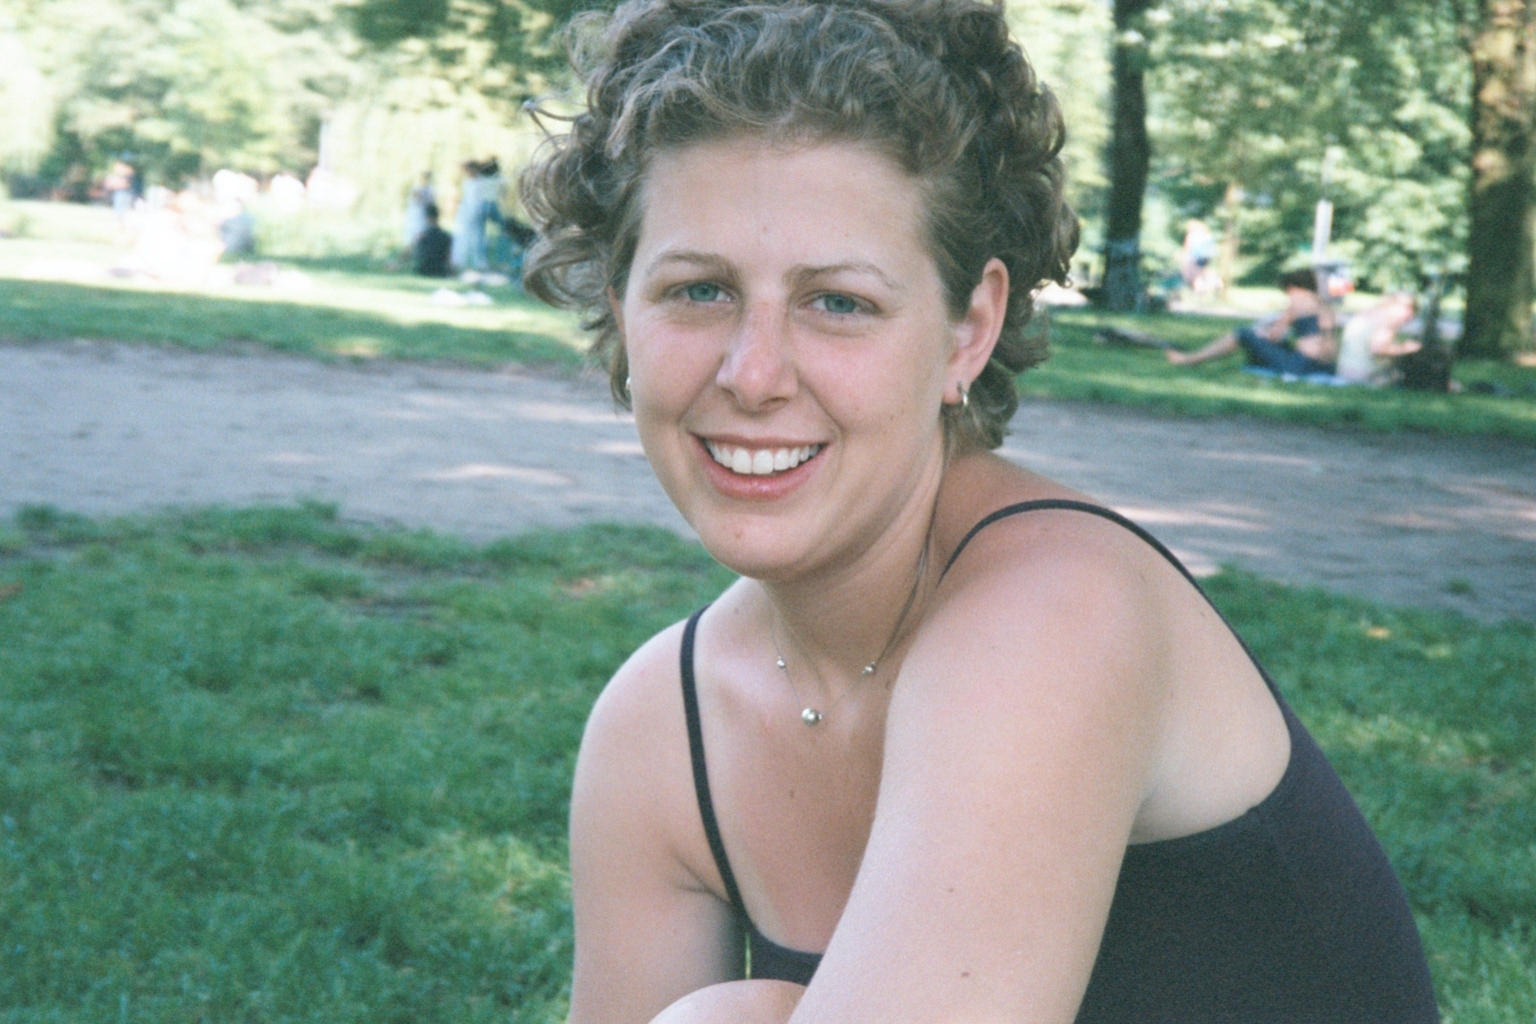 Julie just smiling in Vondel Park in Amsterdam